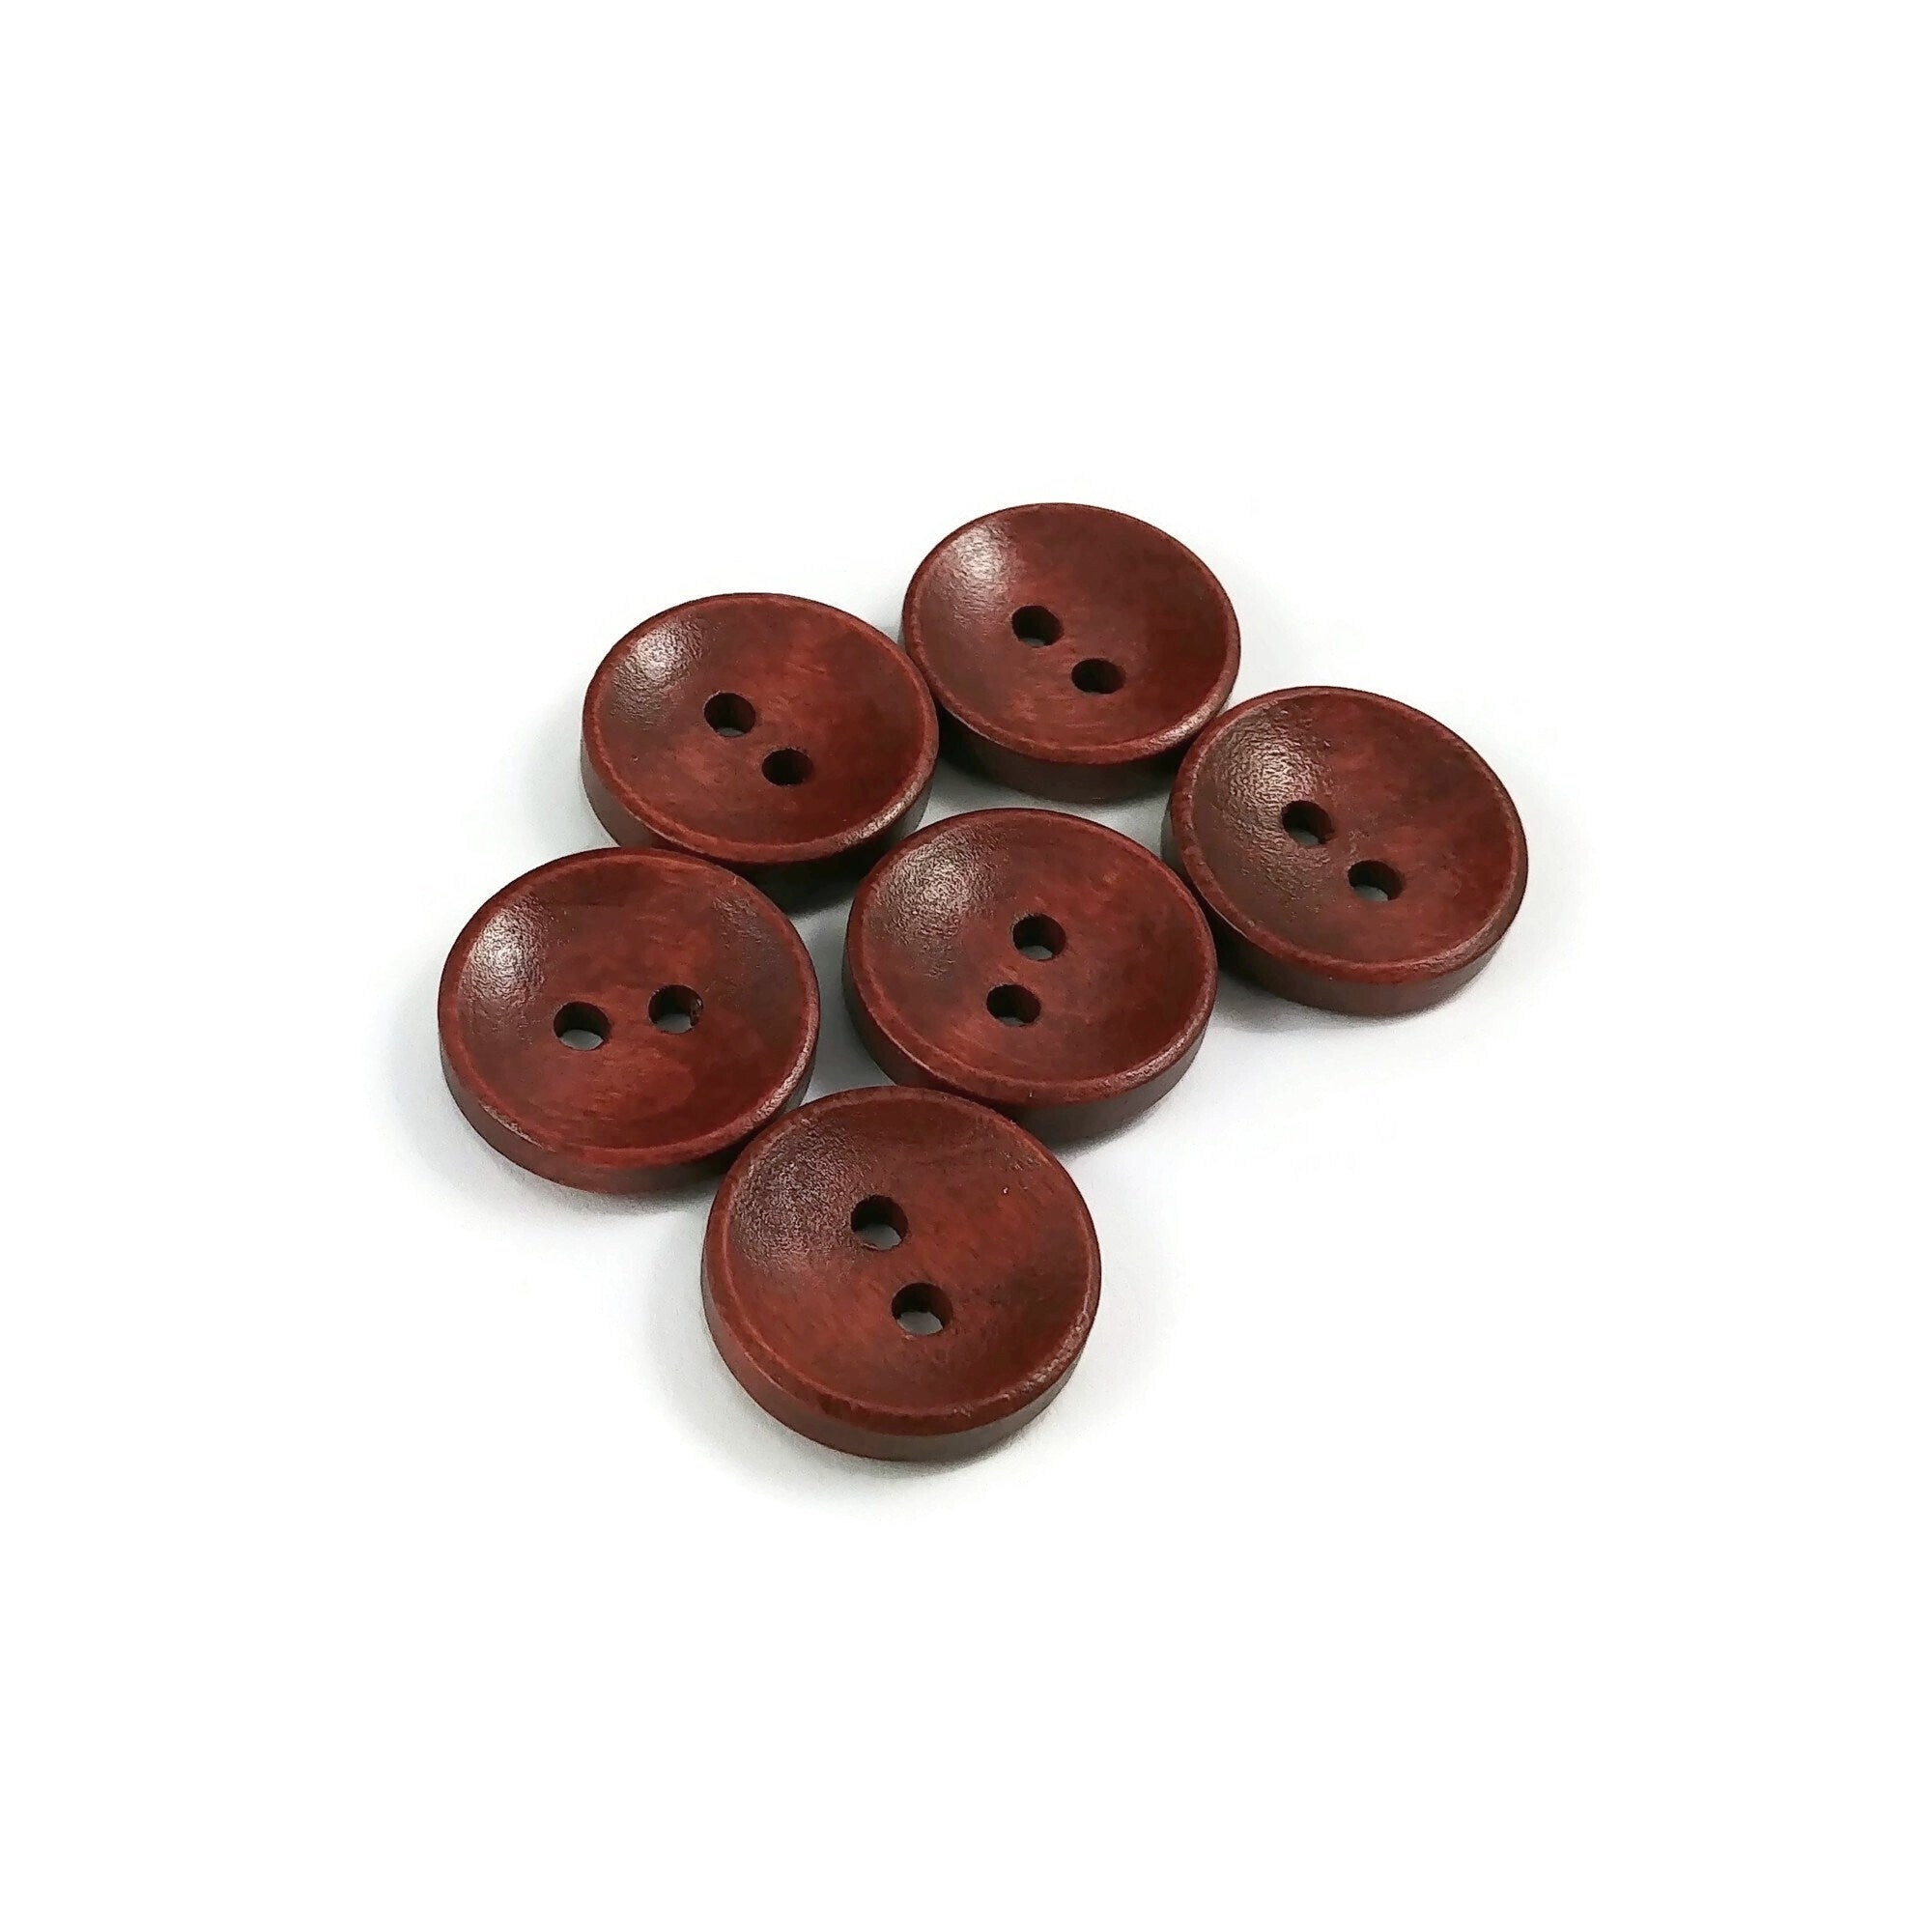 FZBNSRKO 300 Pcs Wooden Buttons,15mm Mixed Color Wood Buttons,Wooden Buttons for Crafts 2-Hole Wooden Buttons for DIY Sewing Process Scrapbook